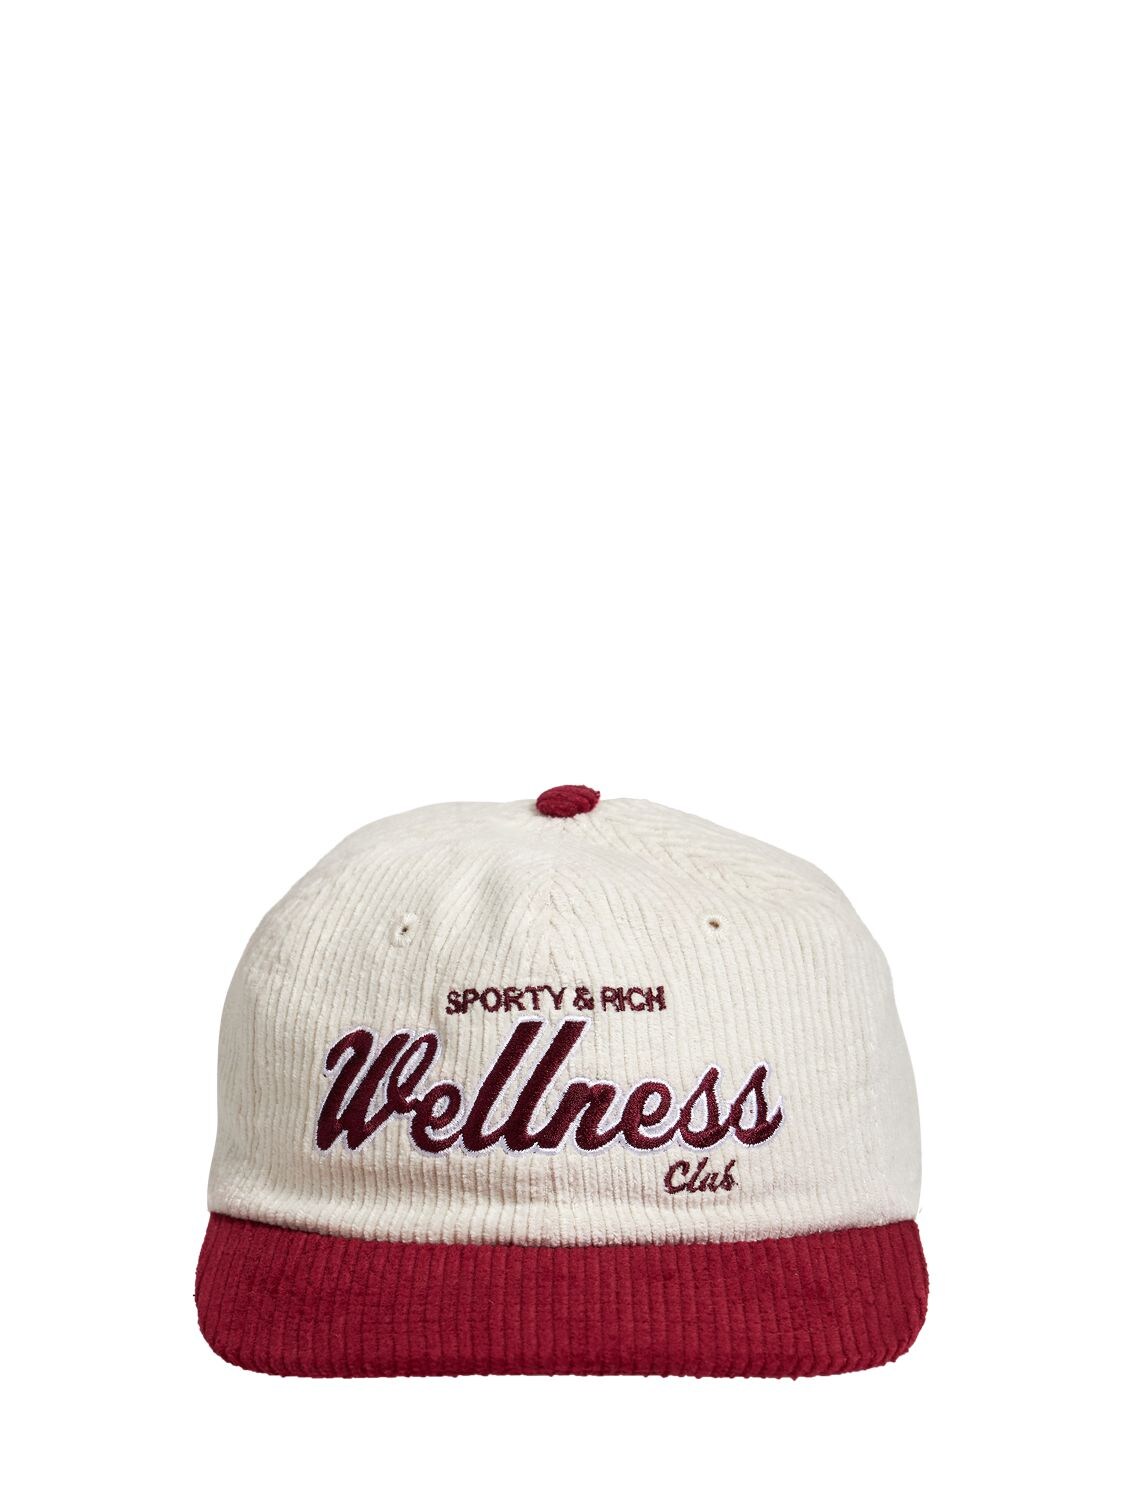 Wellness Club Corduroy Baseball Hat